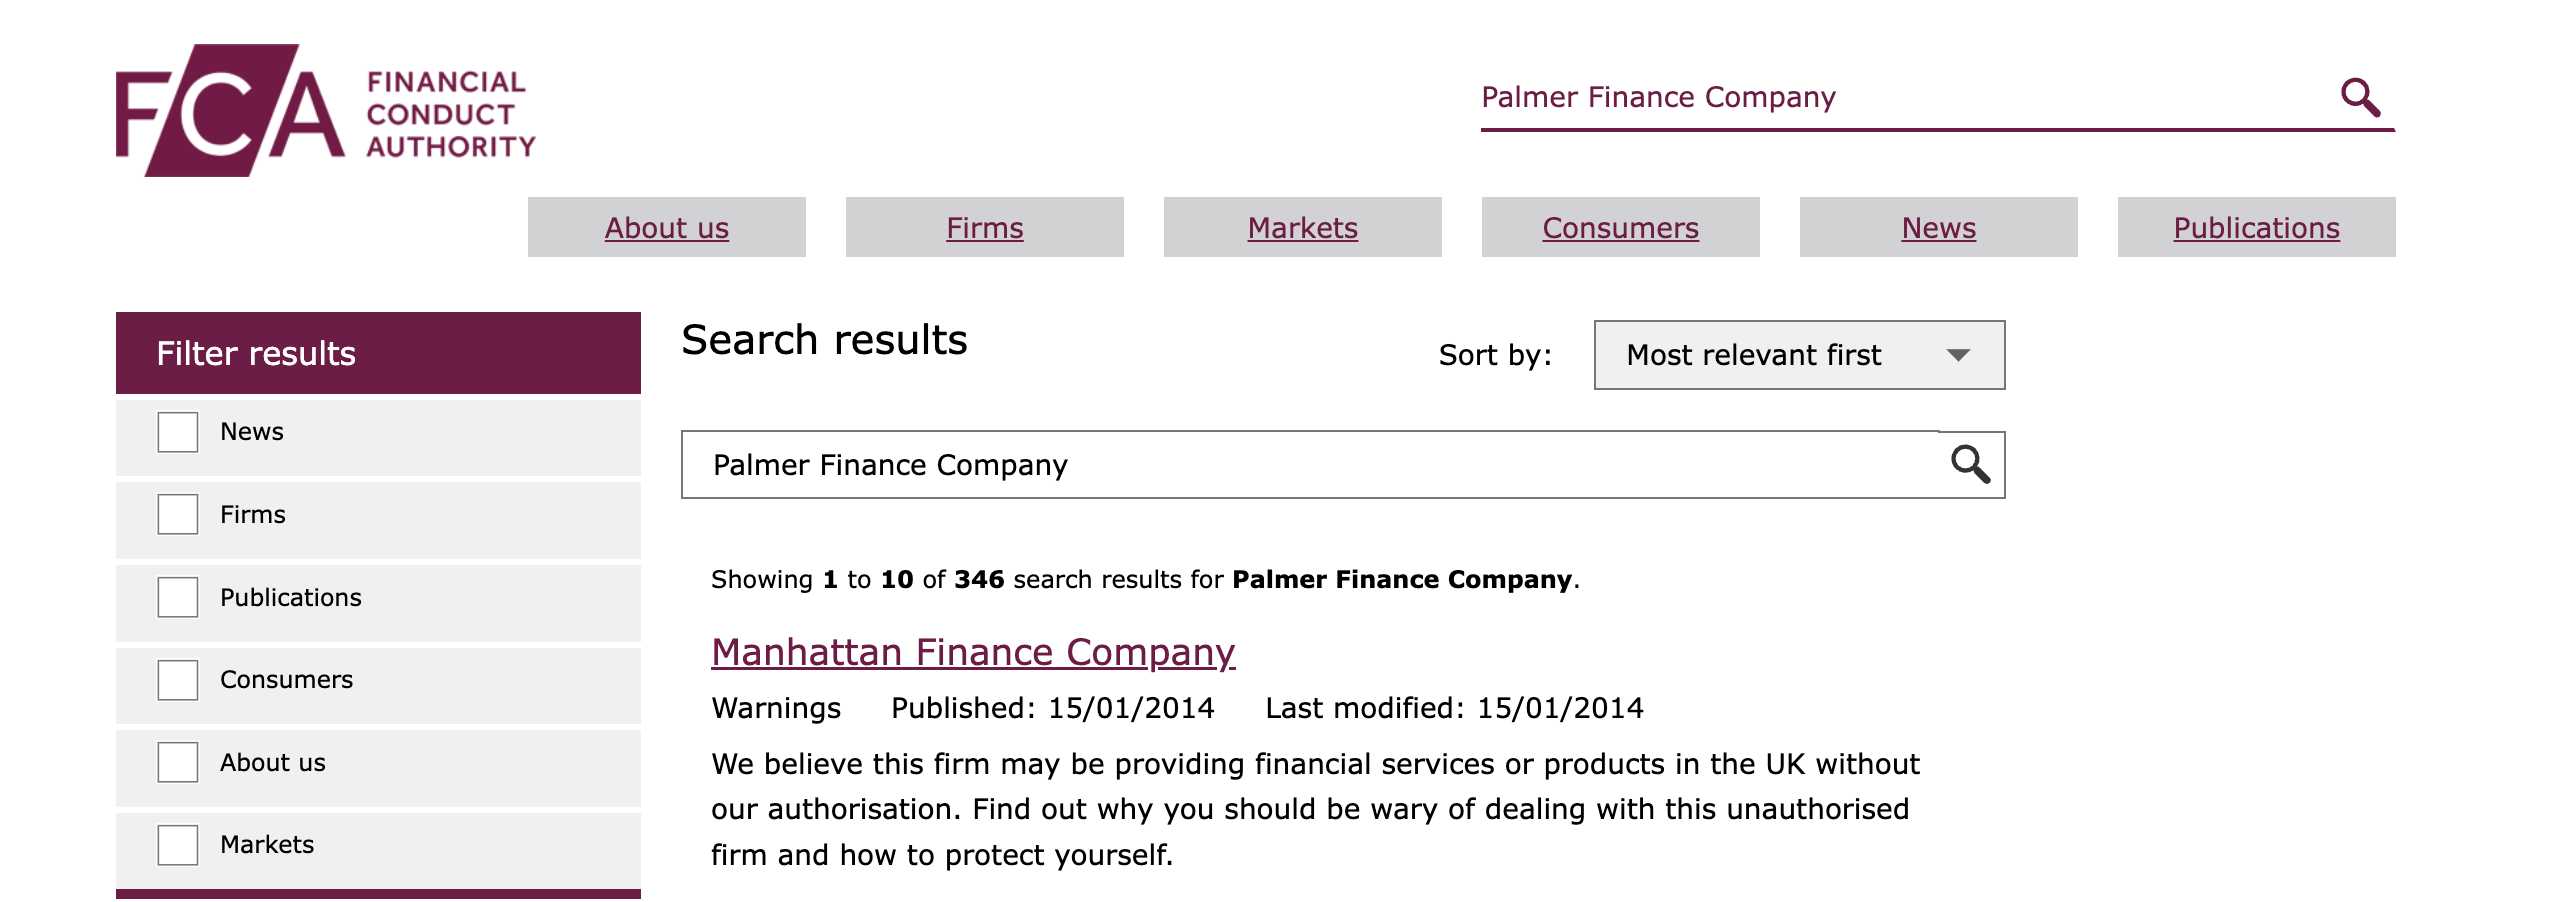 Palmer Finance Company — брокер, который пошел по наклонной